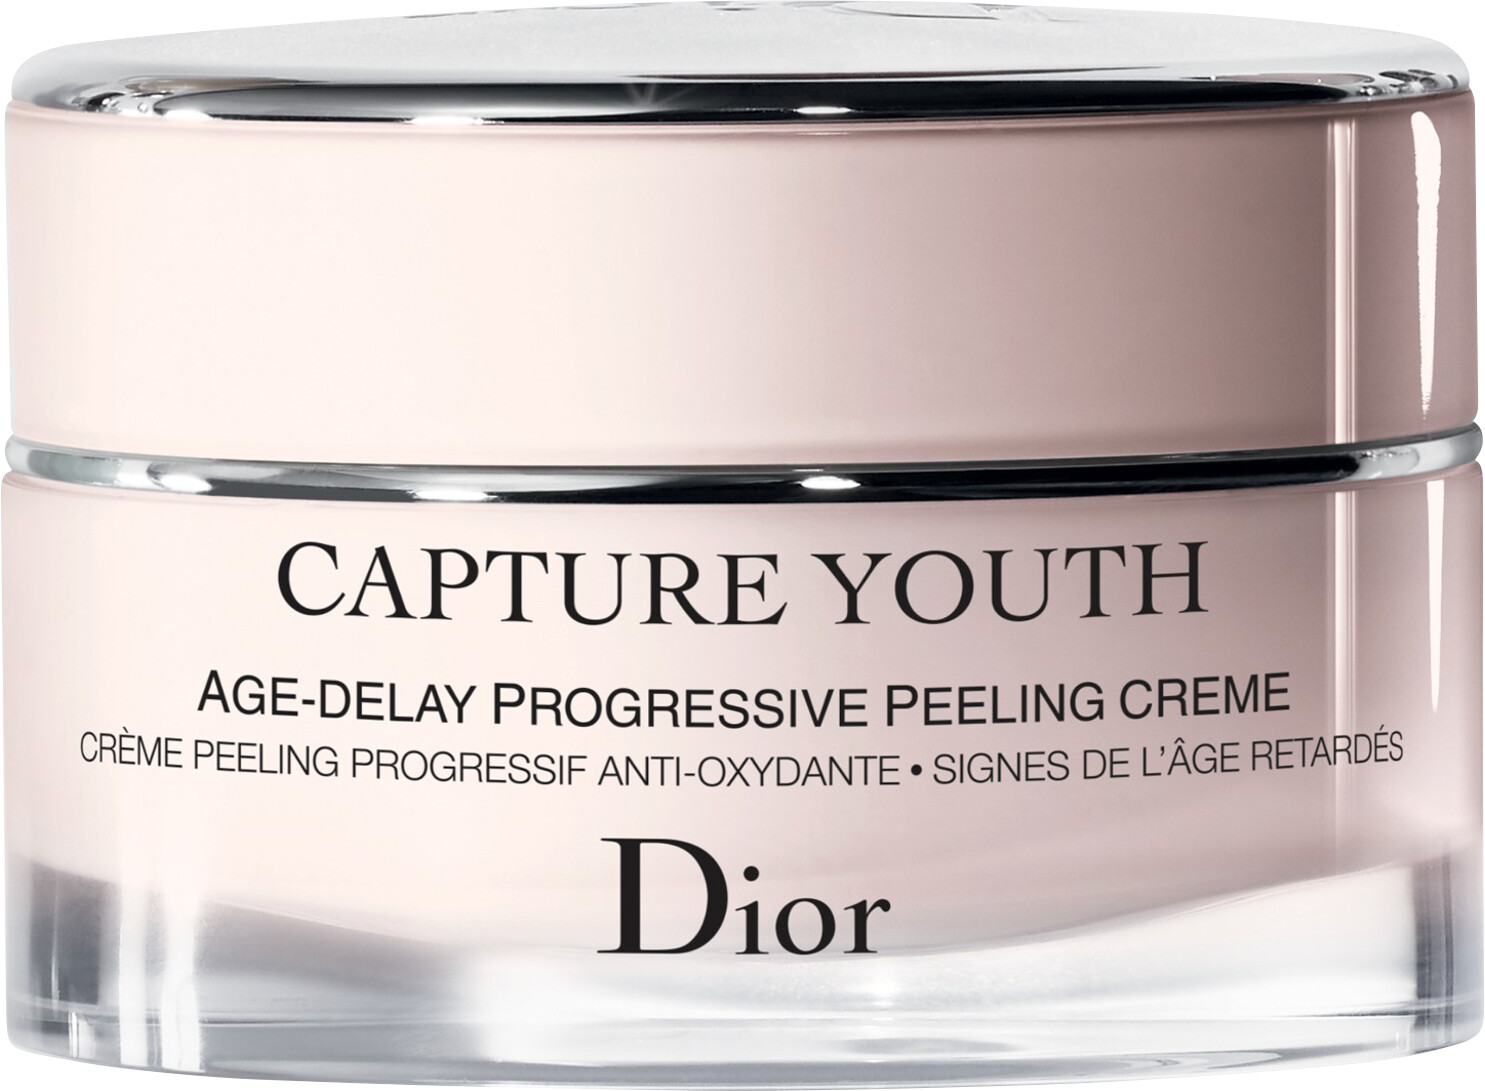 dior cream capture youth